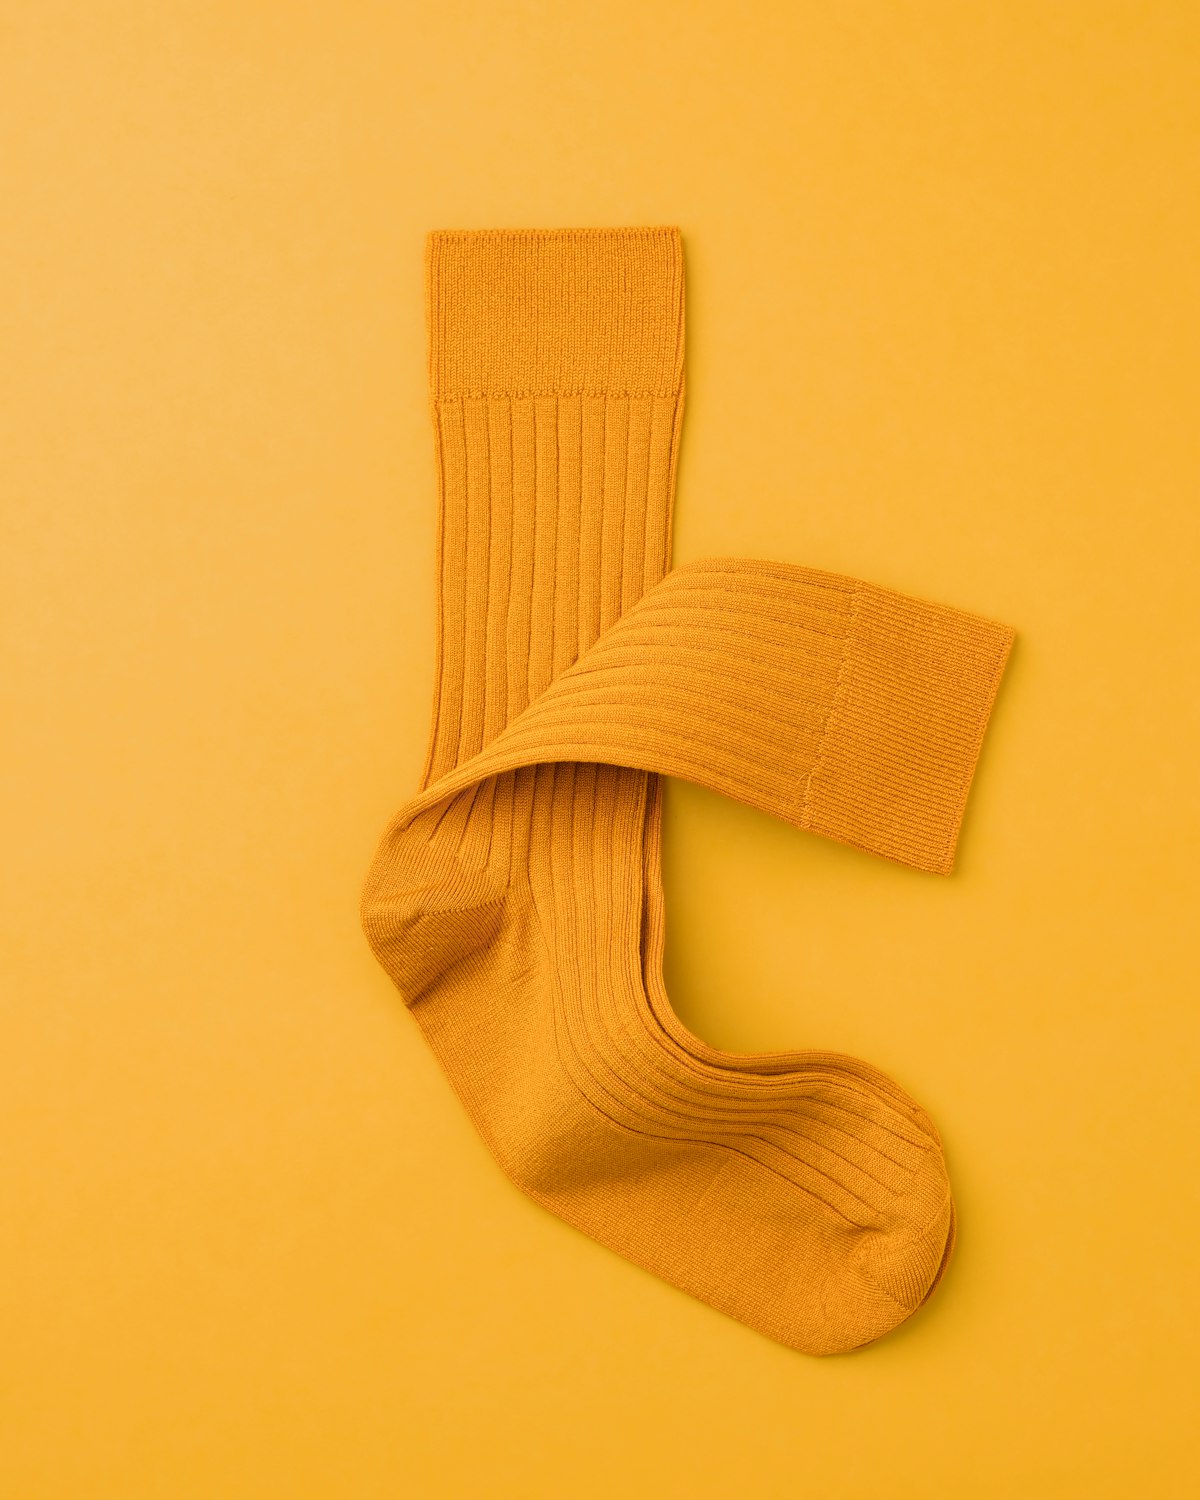 Impactfully No. 34: Socks with purpose